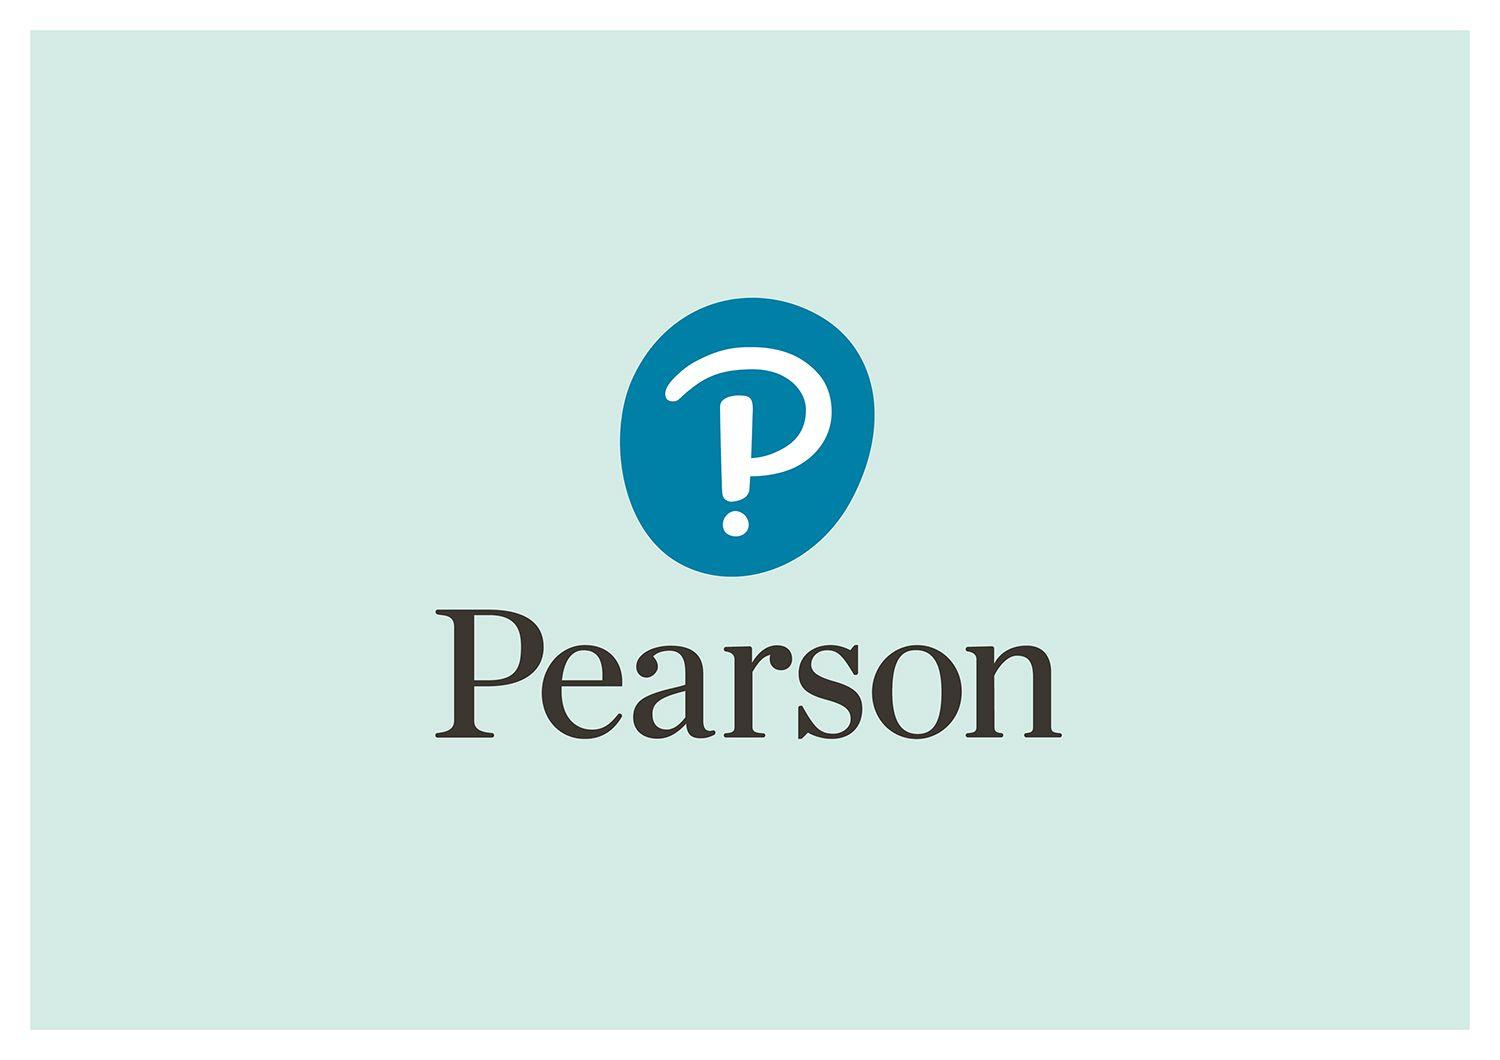 Pearson Logo - meets ! in new Pearson logo – Design Week